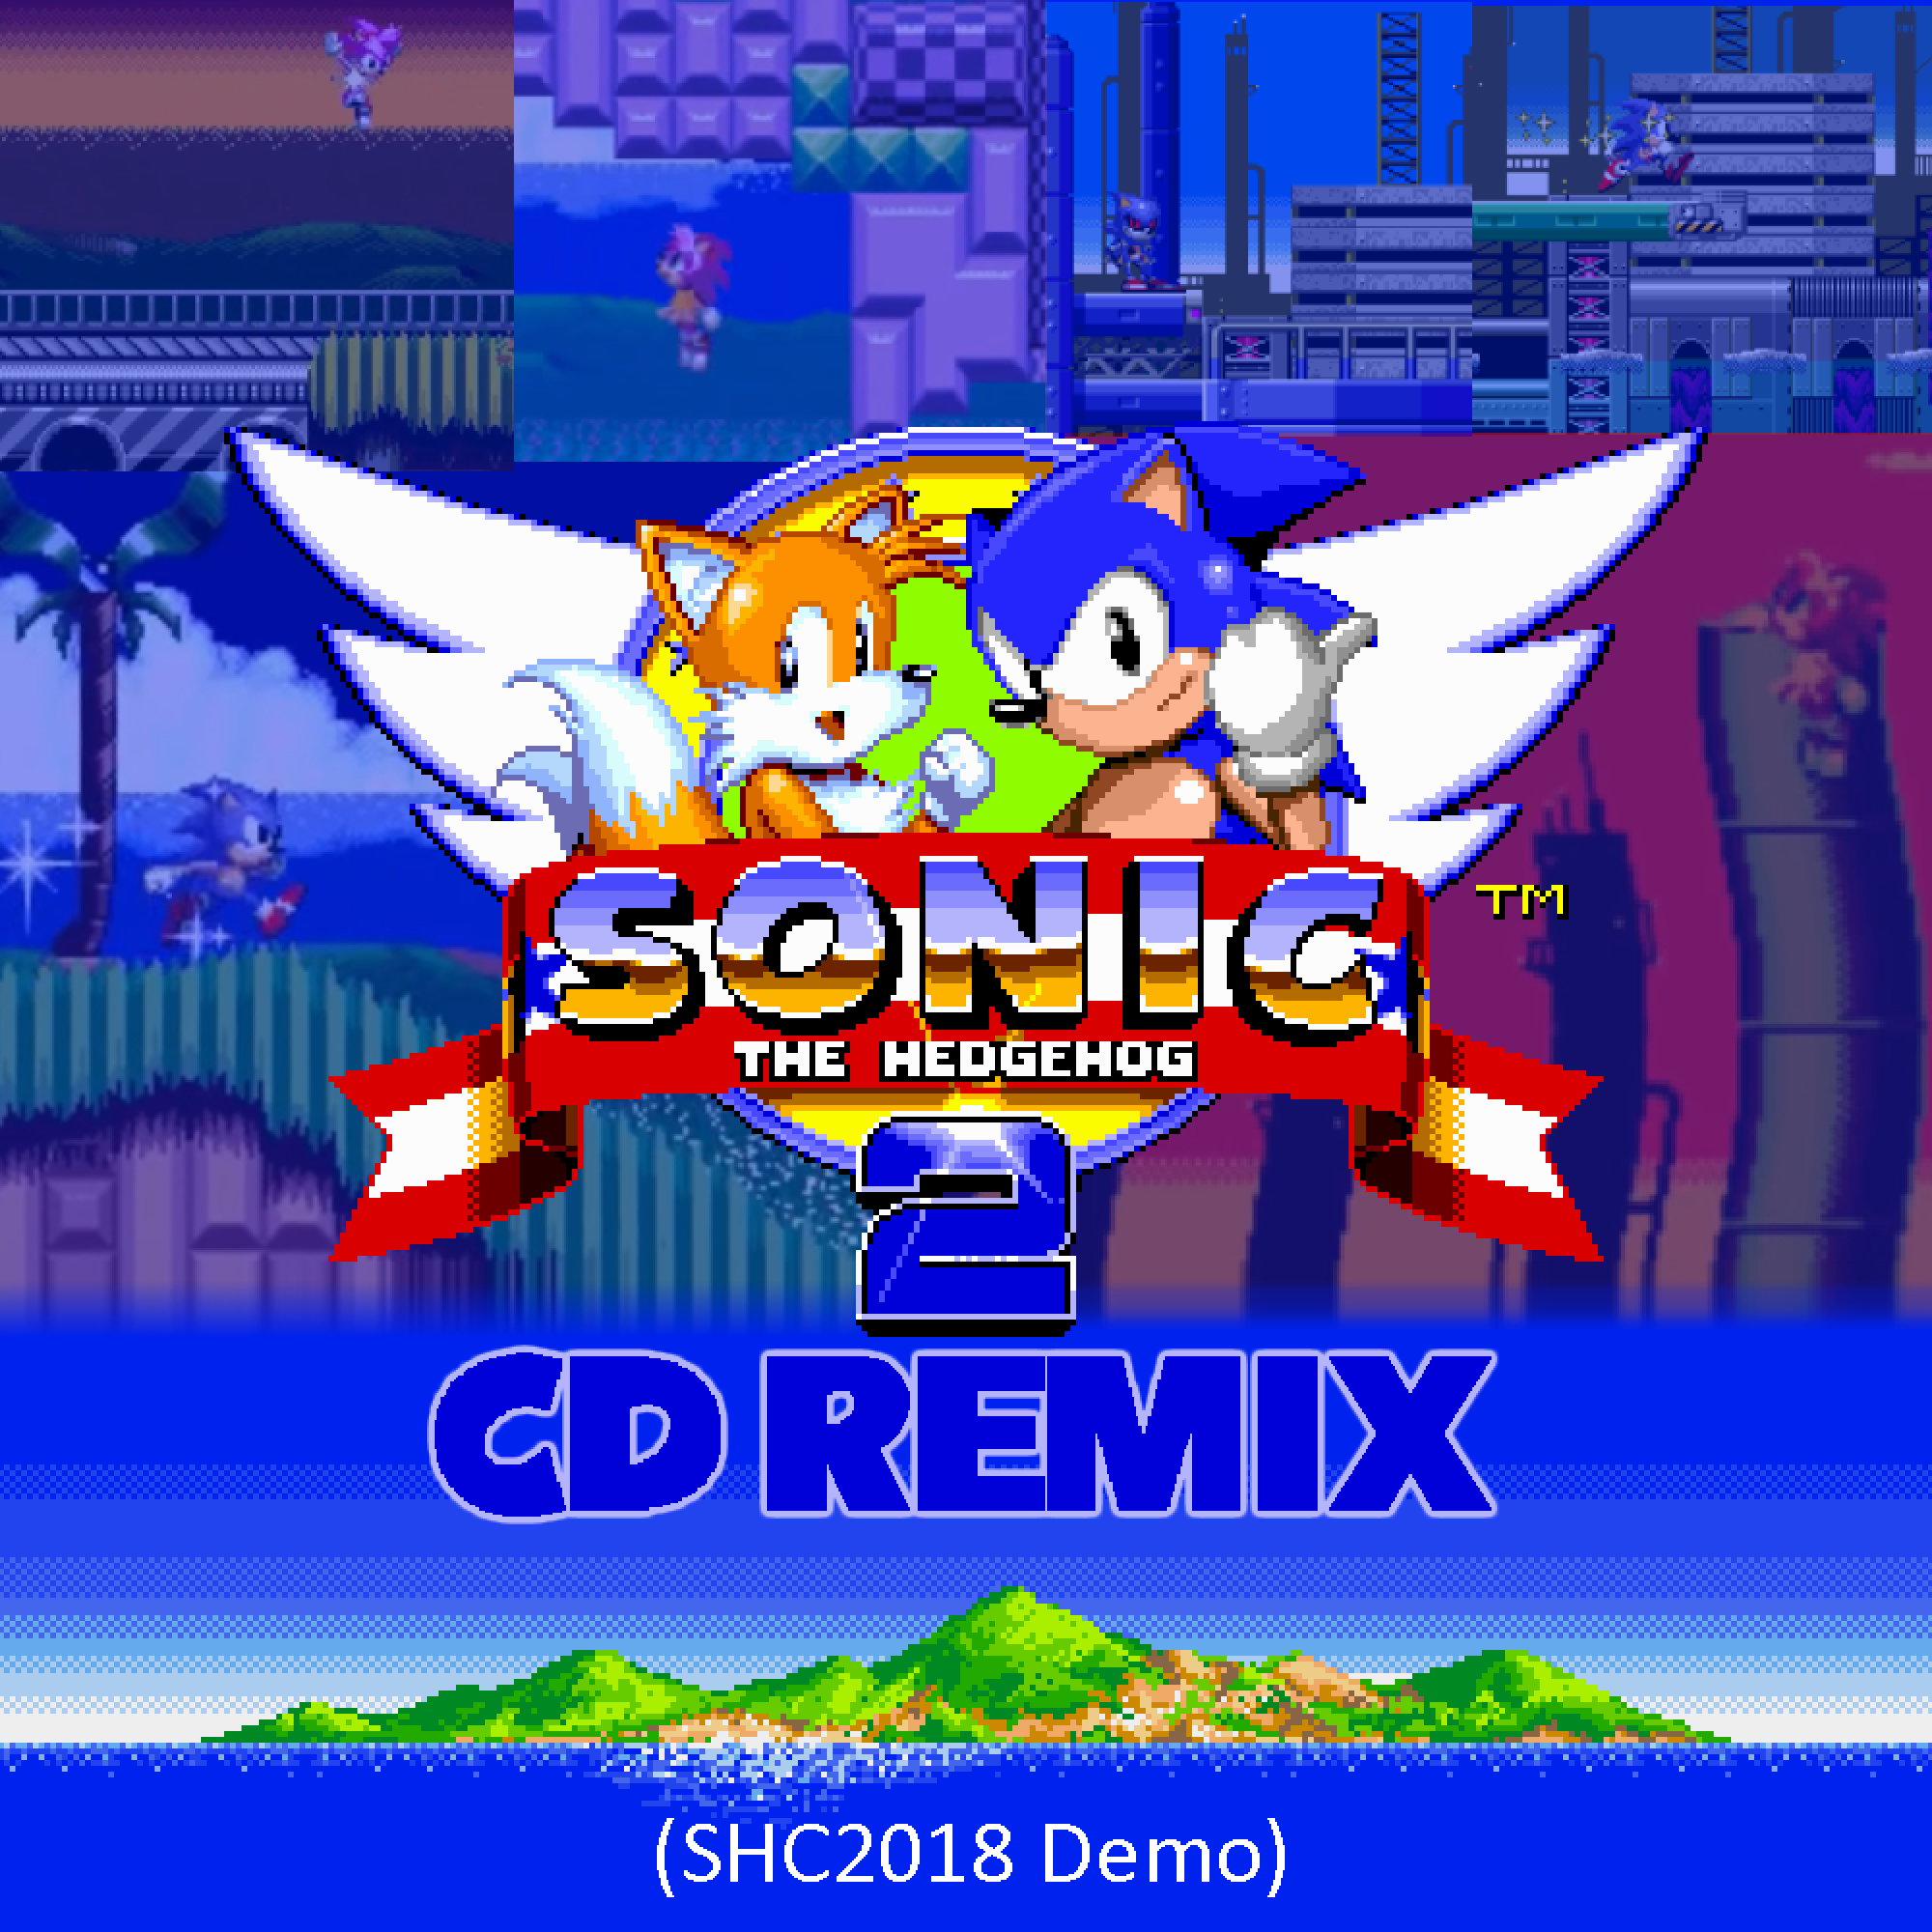 Sonic 2 Retro Remix 2016 edition  Jogos online, Retro, Jogos do sonic